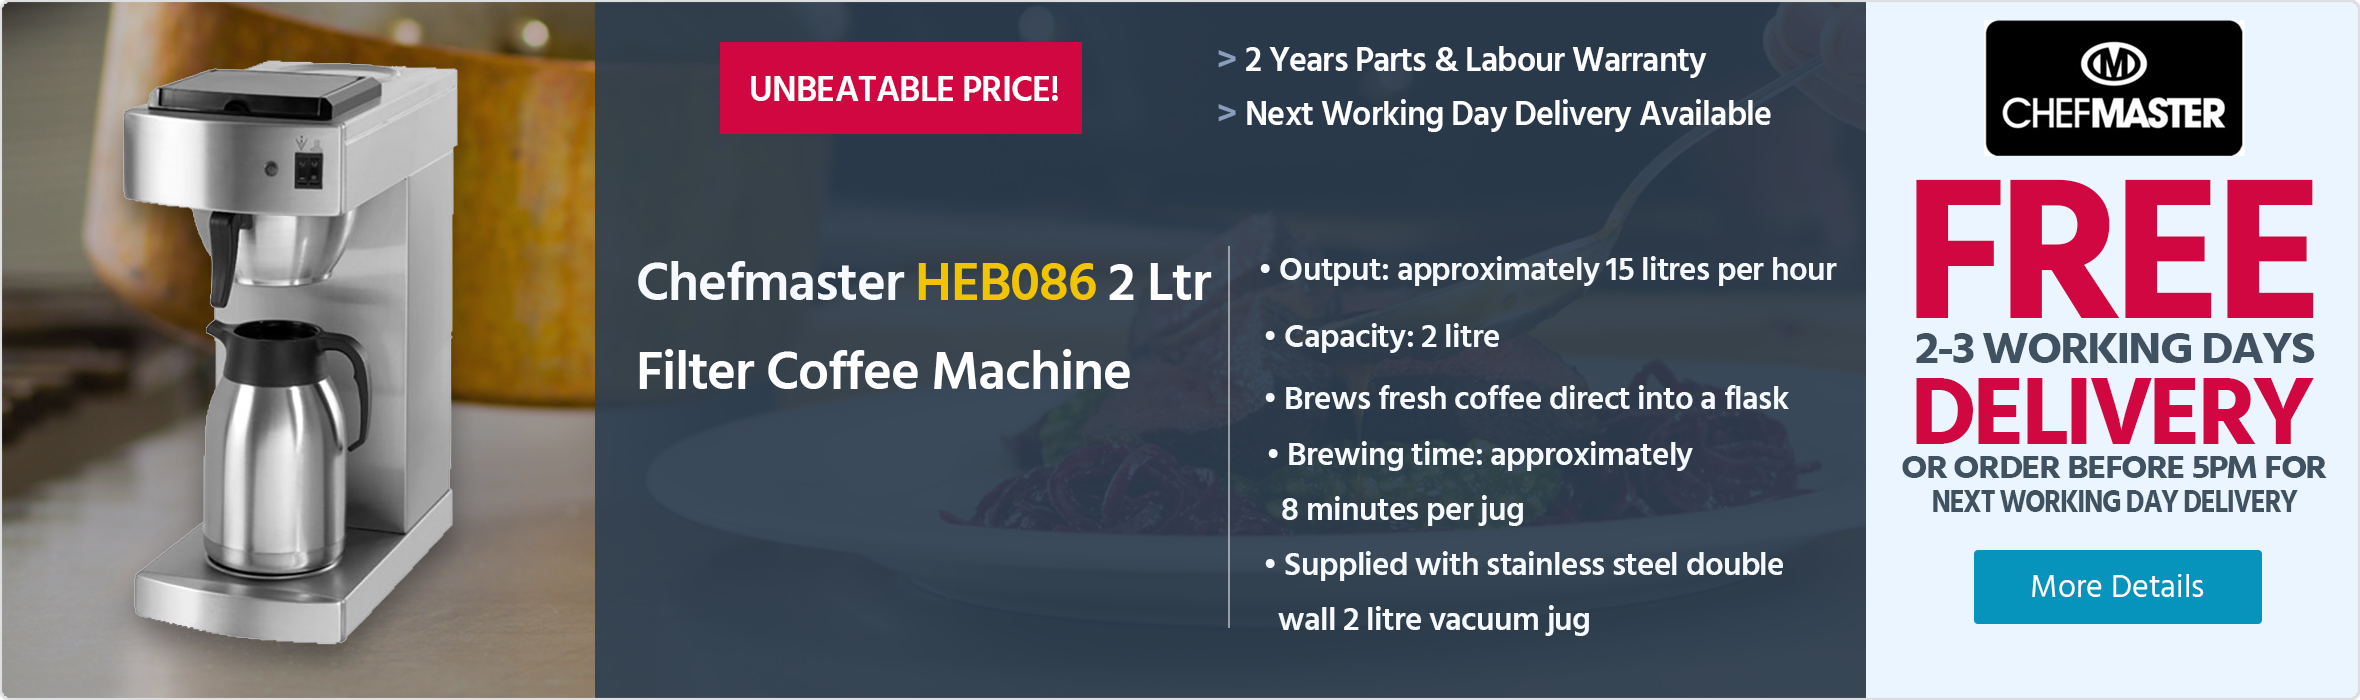 Chefmaster HEB086 2 Ltr Filter Coffee Machine